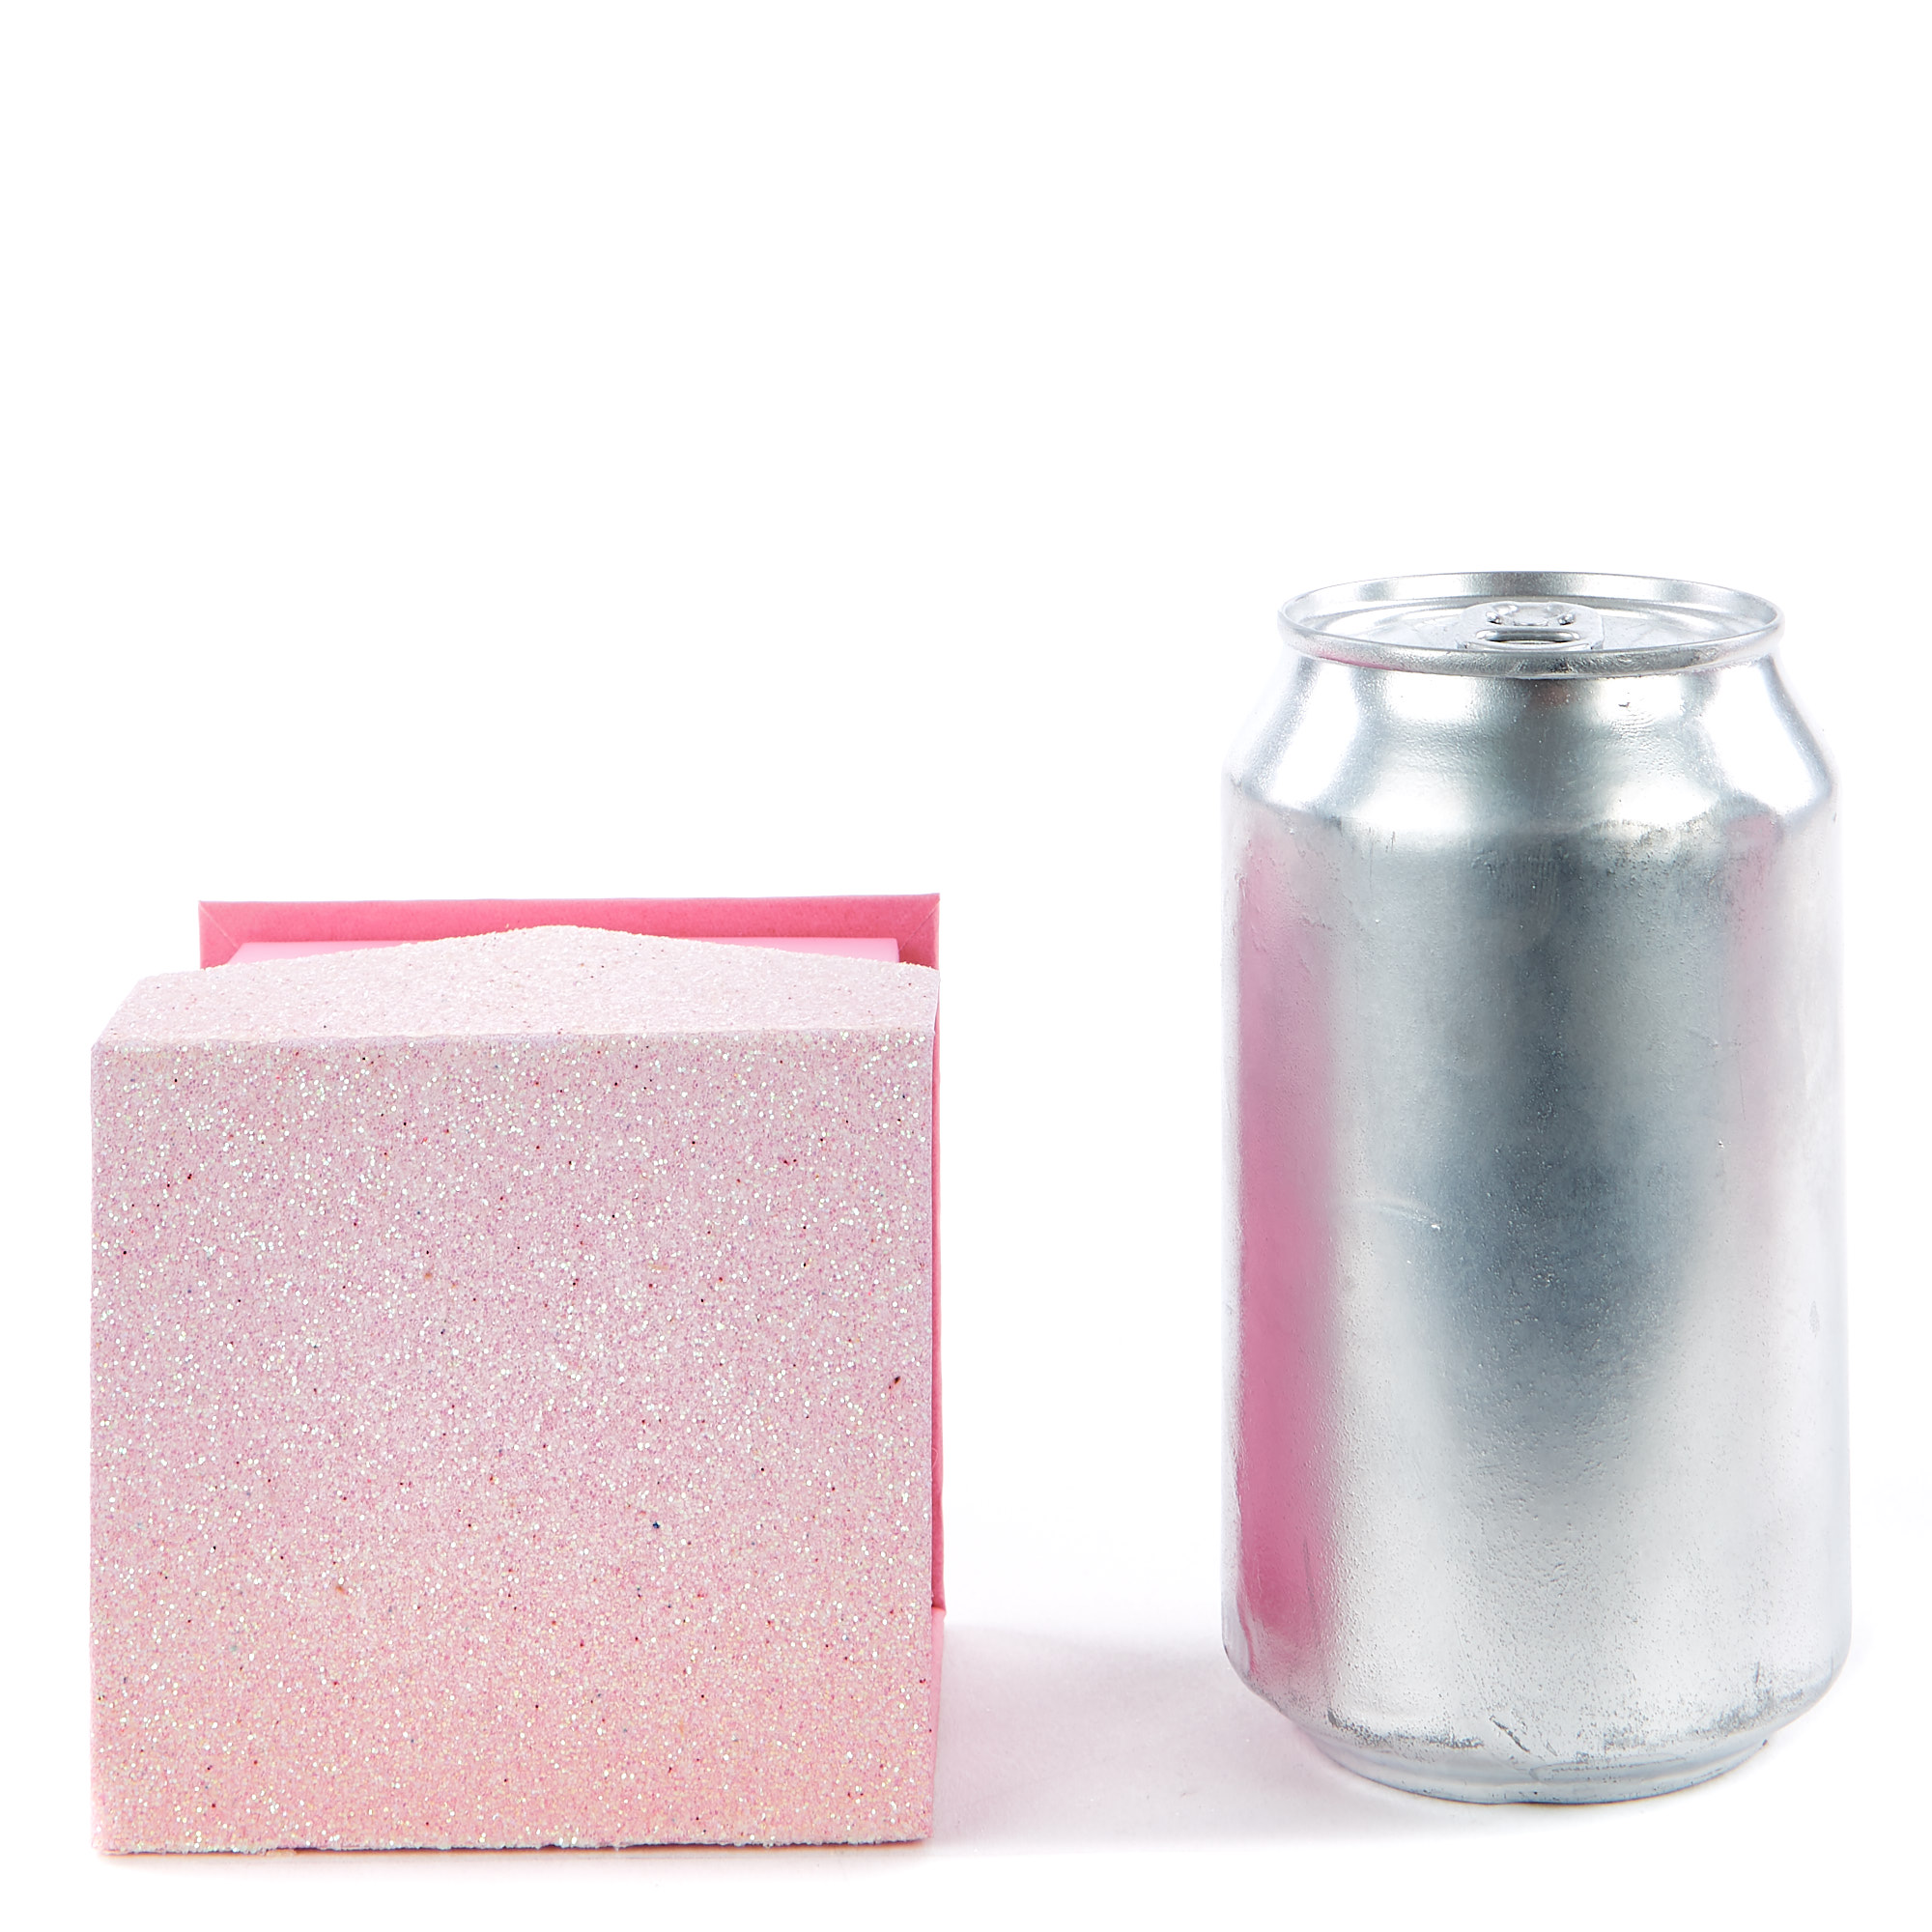 Pink Glitter Jewellery Boxes - Set Of 2